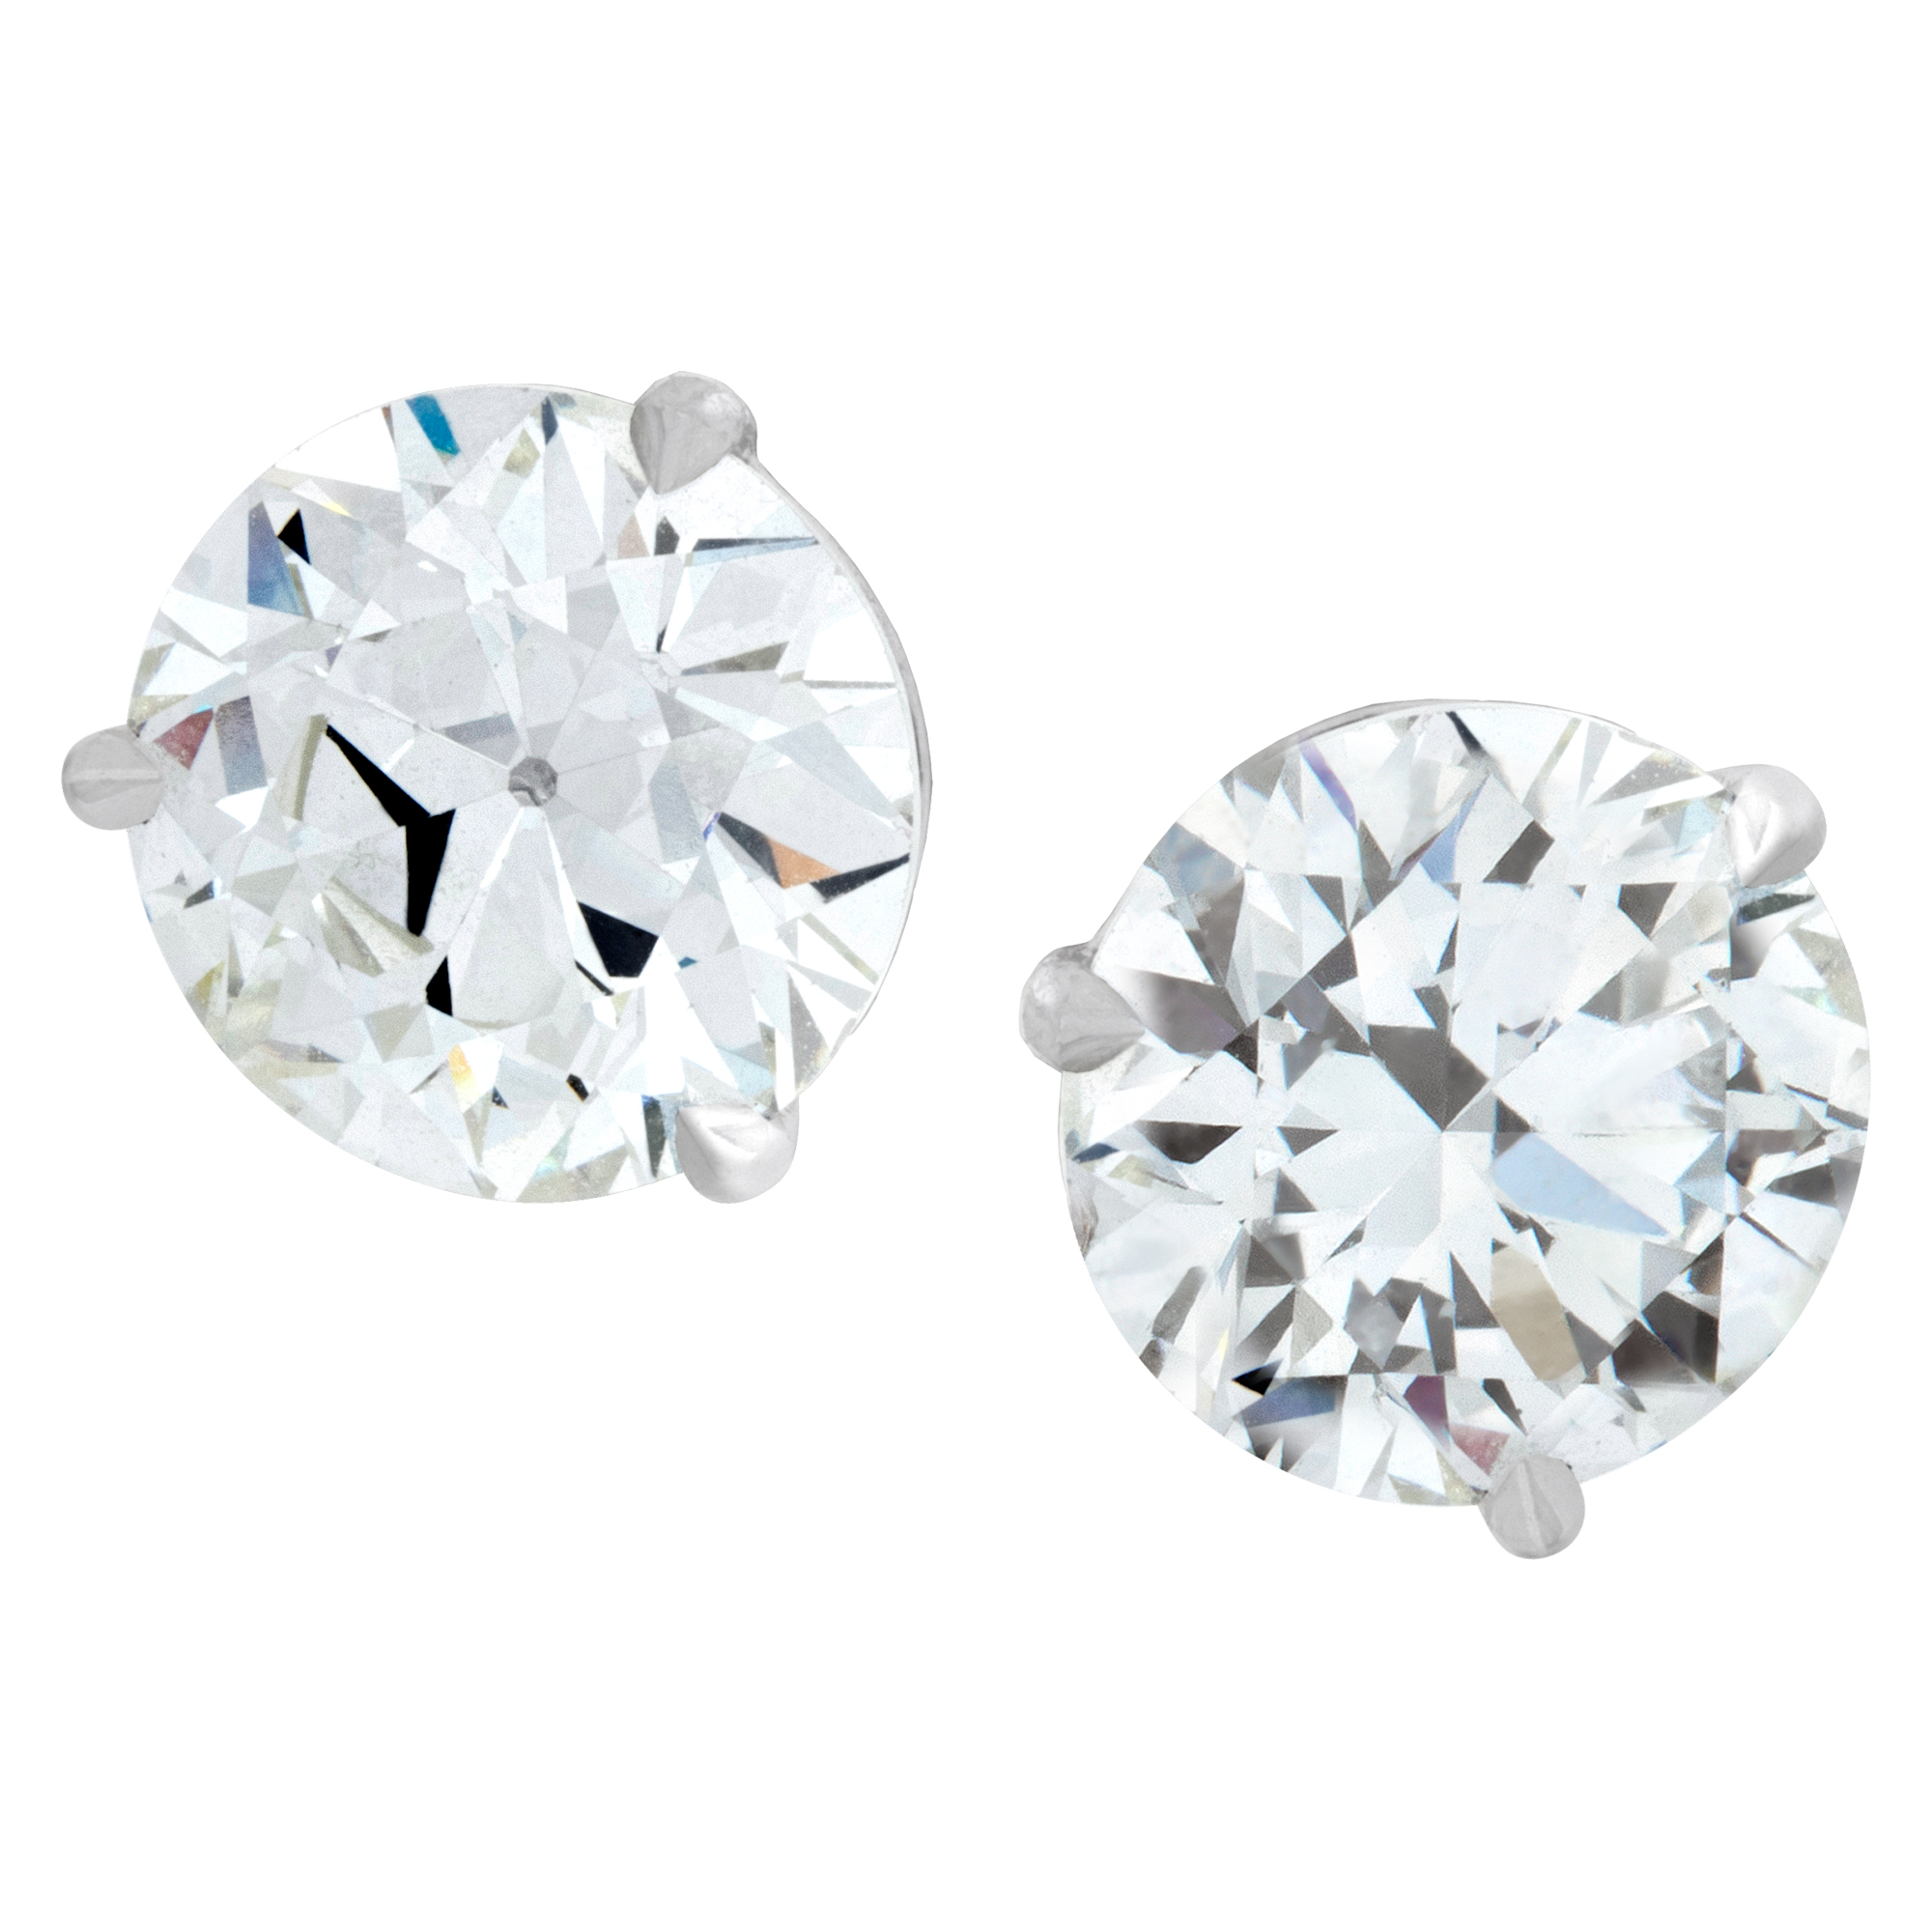 Pair of Gia certified full cut round brilliant diamond stud earringsset in 18K white gold "Martini" image 1